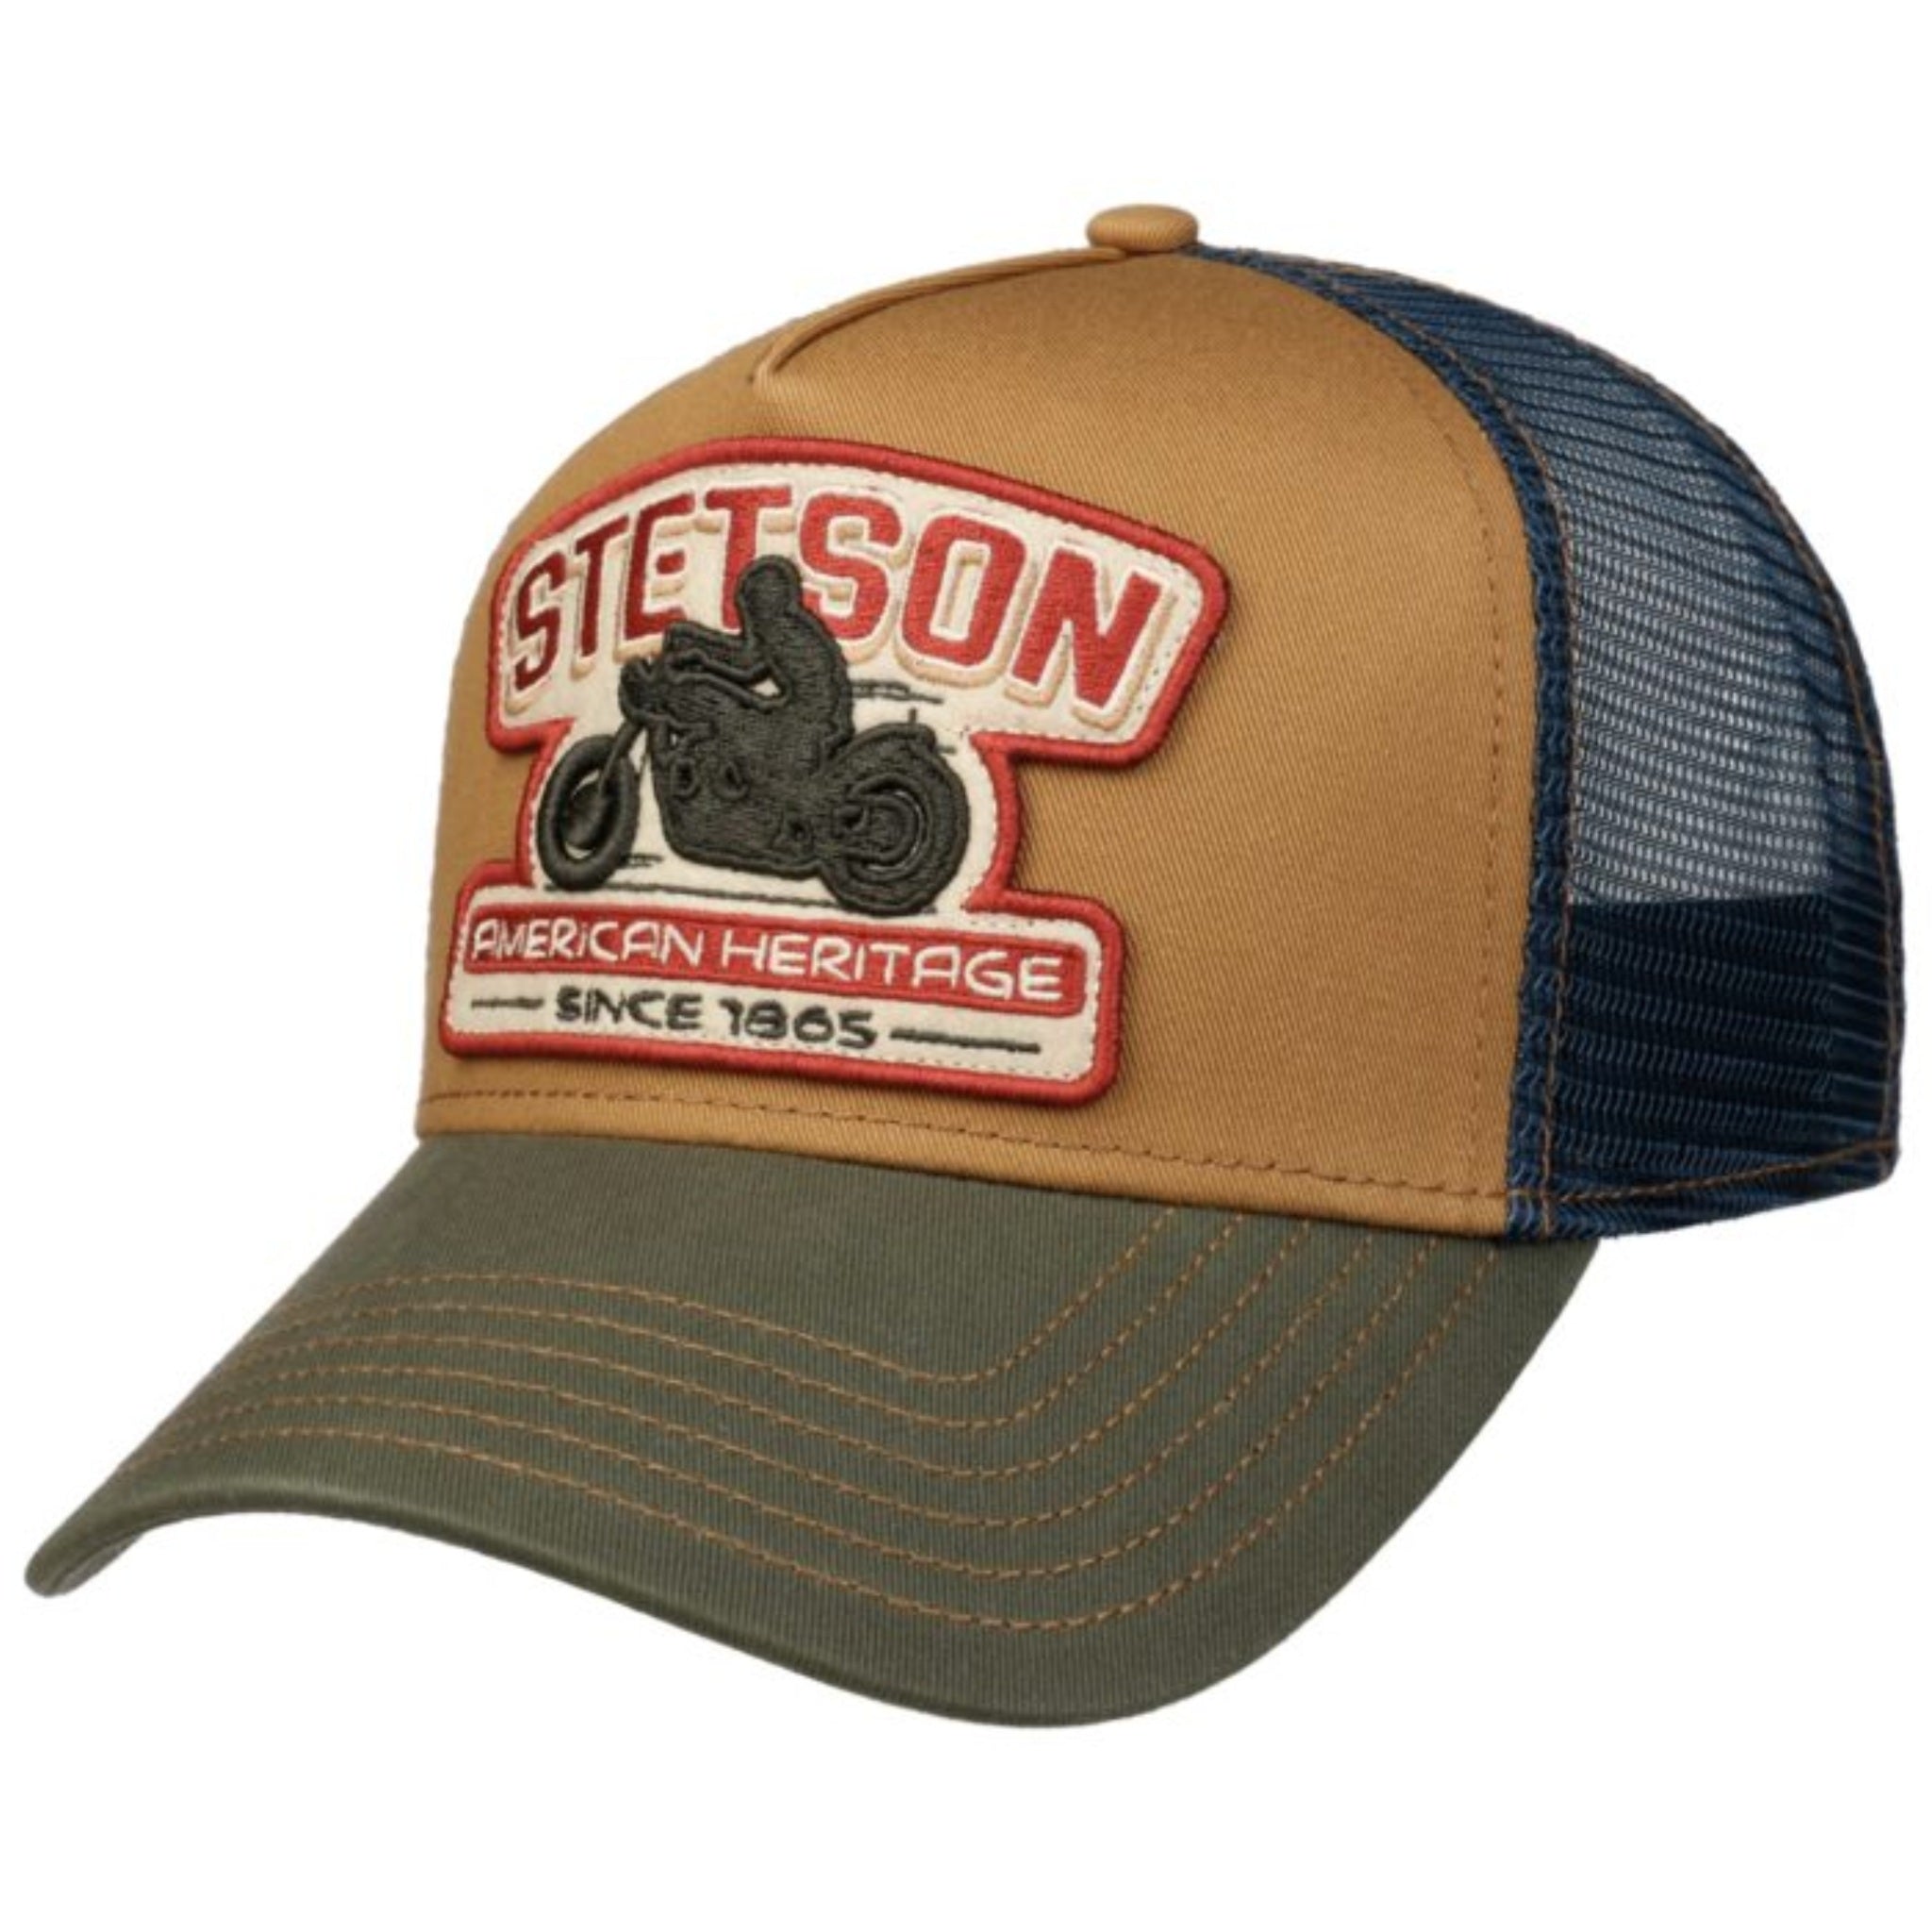 The Hat Shop Stetson Motorcycle Trucker Cap